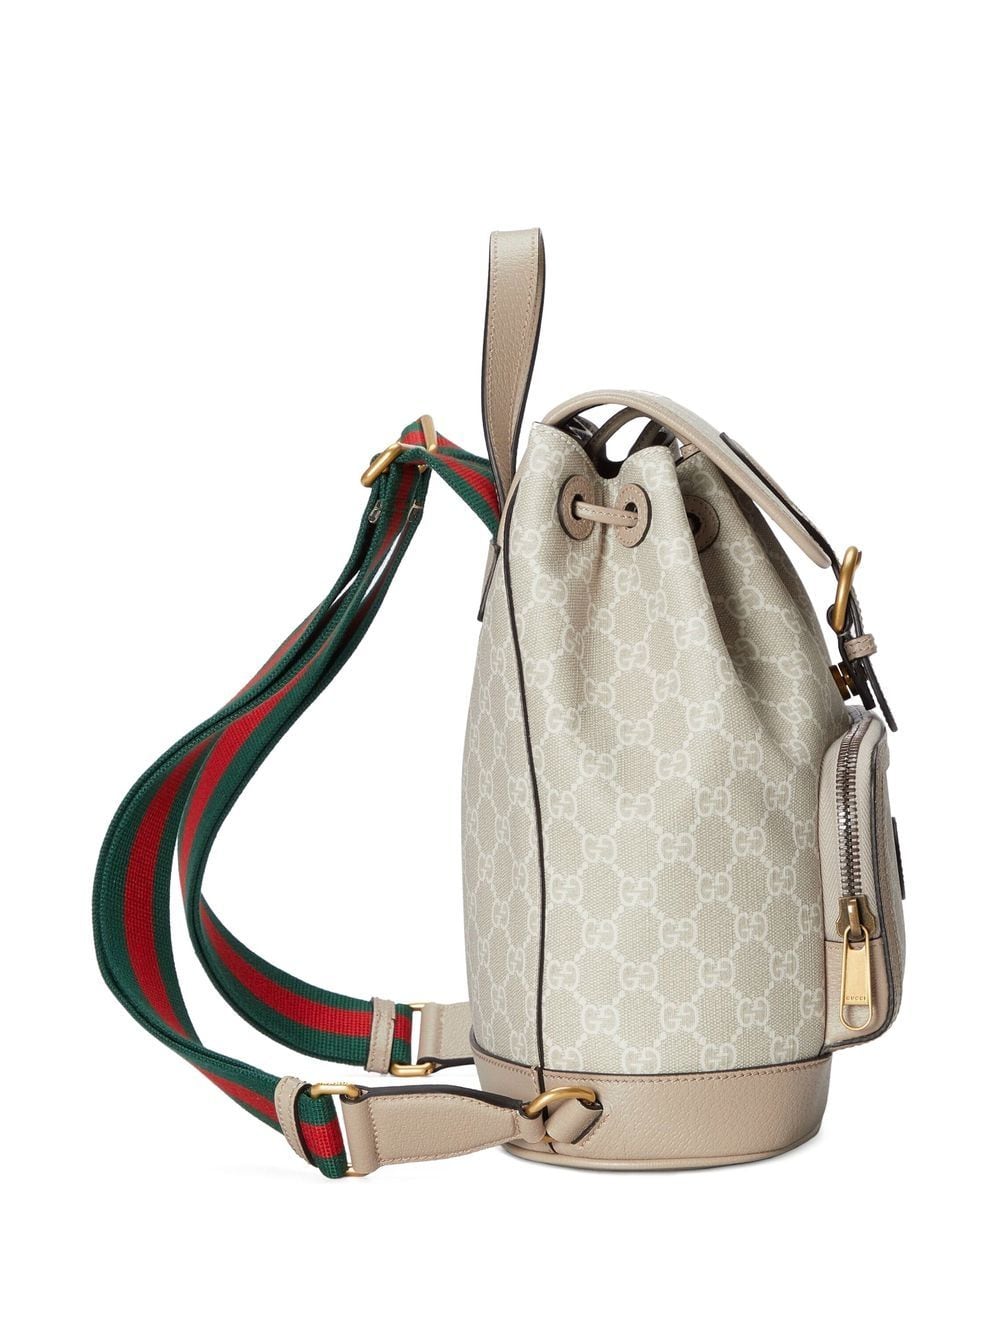 Medium backpack with Interlocking G